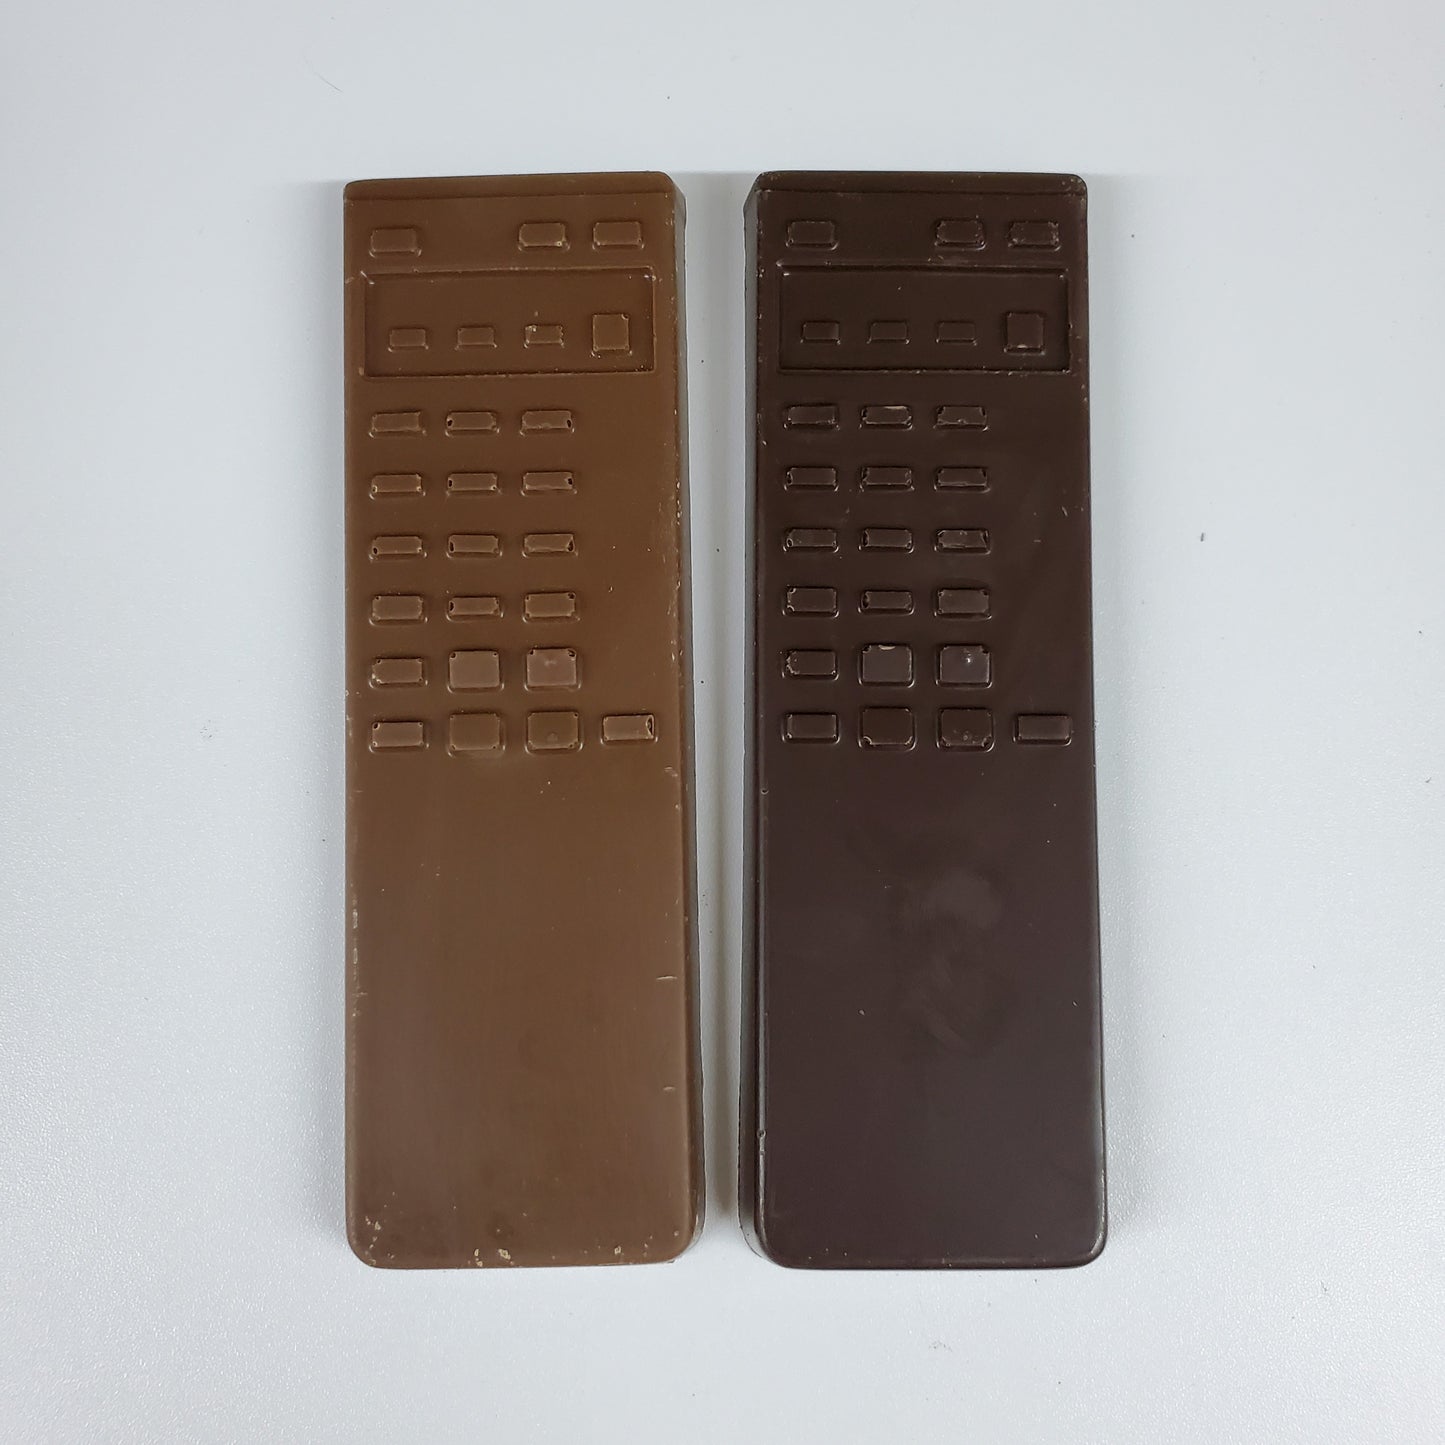 Milk and Dark Chocolate Shaped Remote Controls